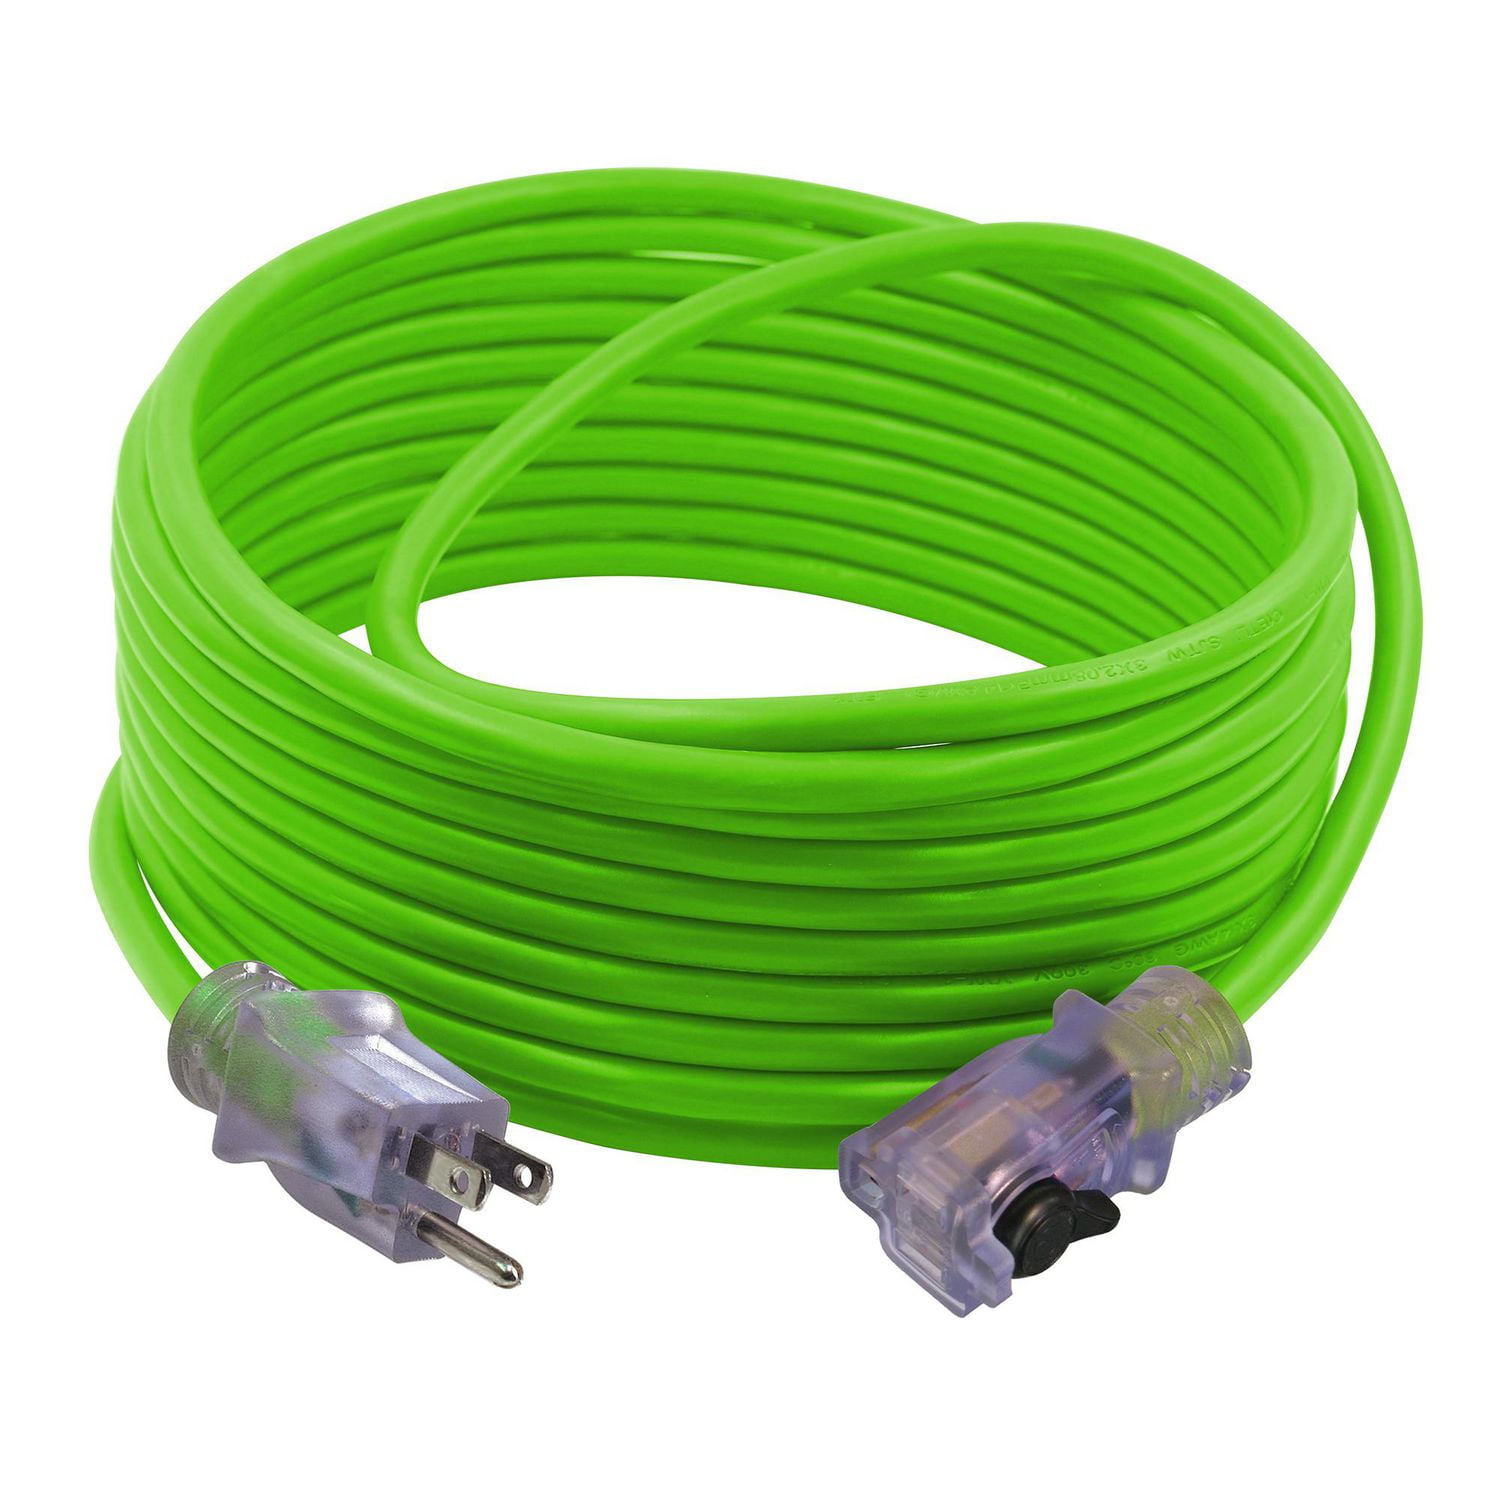 Prime Wire & Cable Neon Flex 25m Extension Cord, 25m (82ft) 16/3